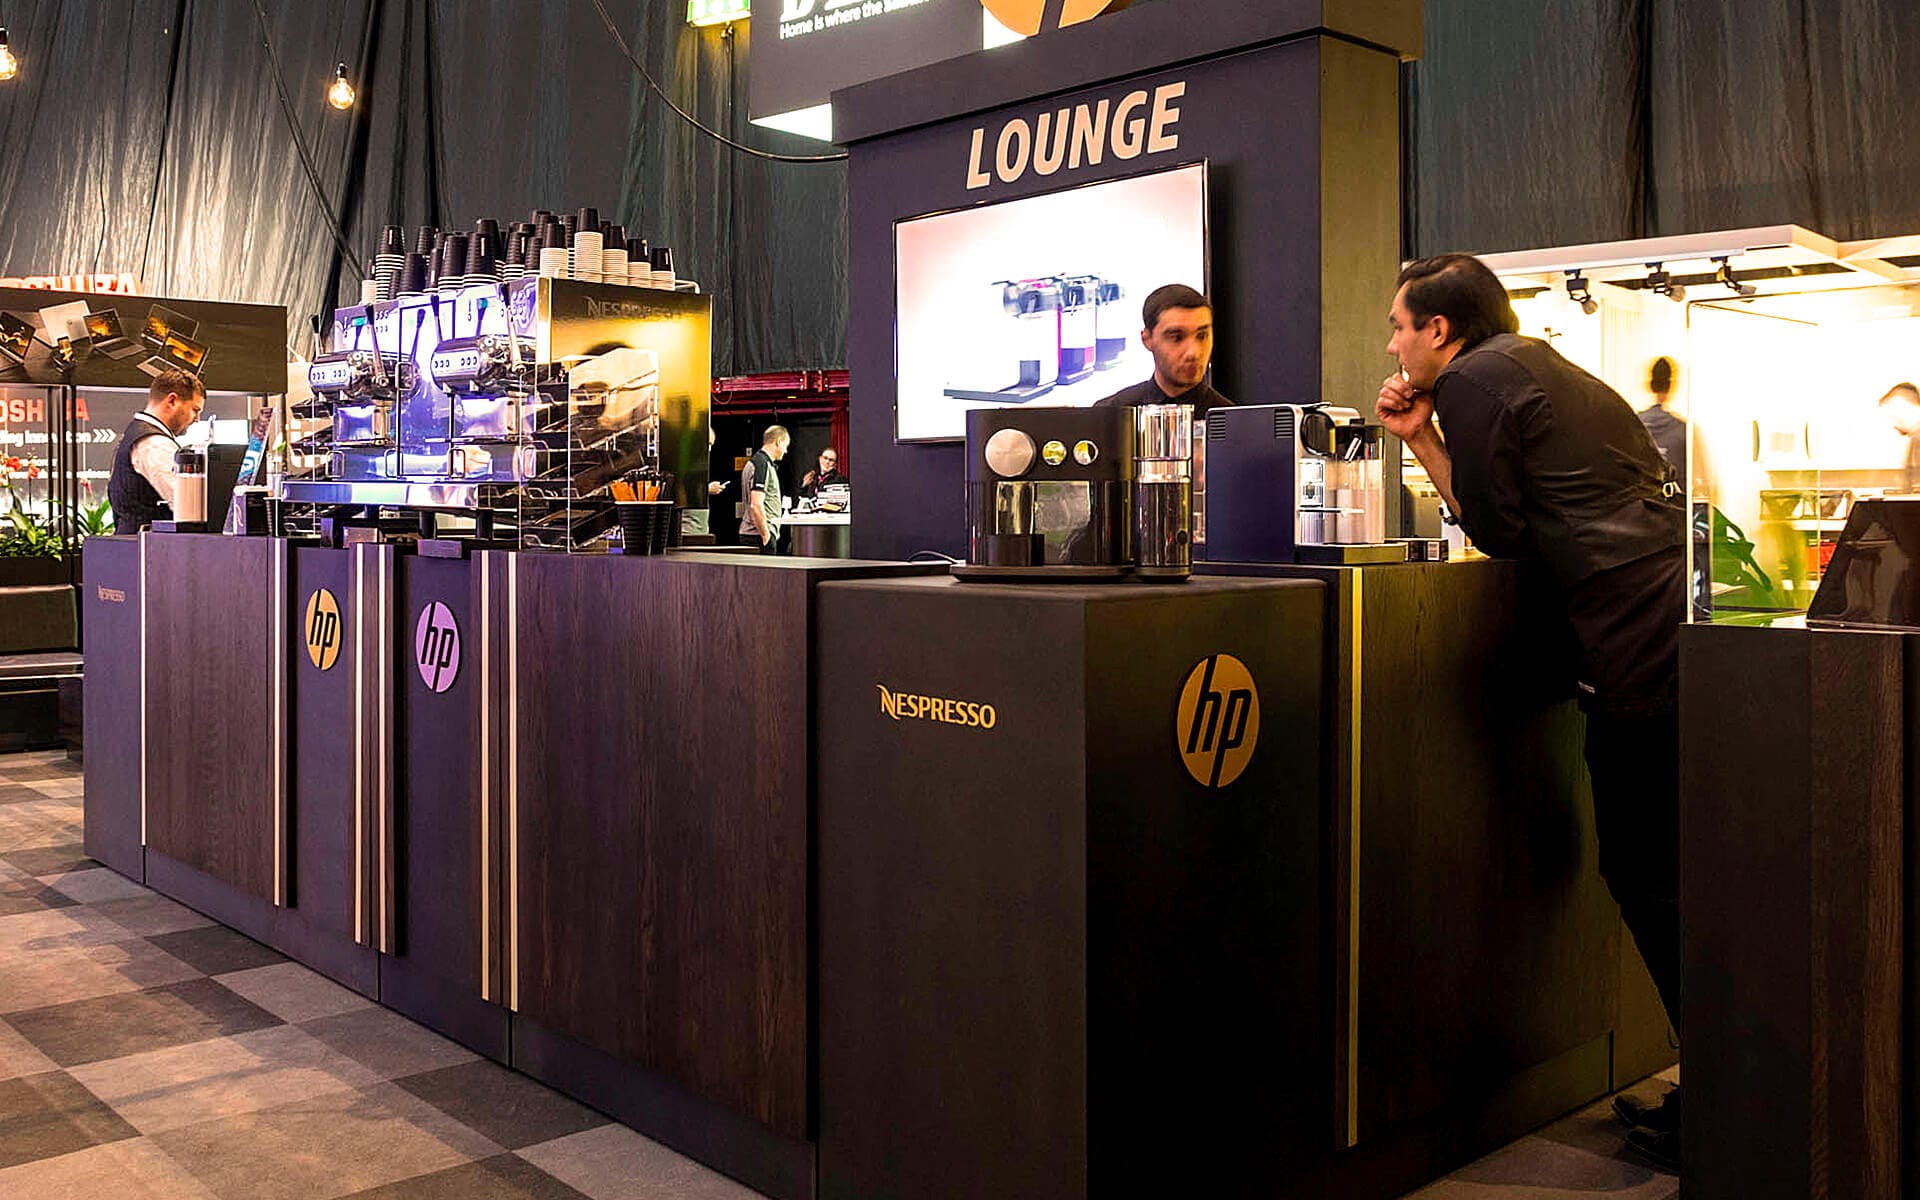 Specialbyggd Nespresso bar till HP monter på Dustin Expo i Globen / Avicii Arena